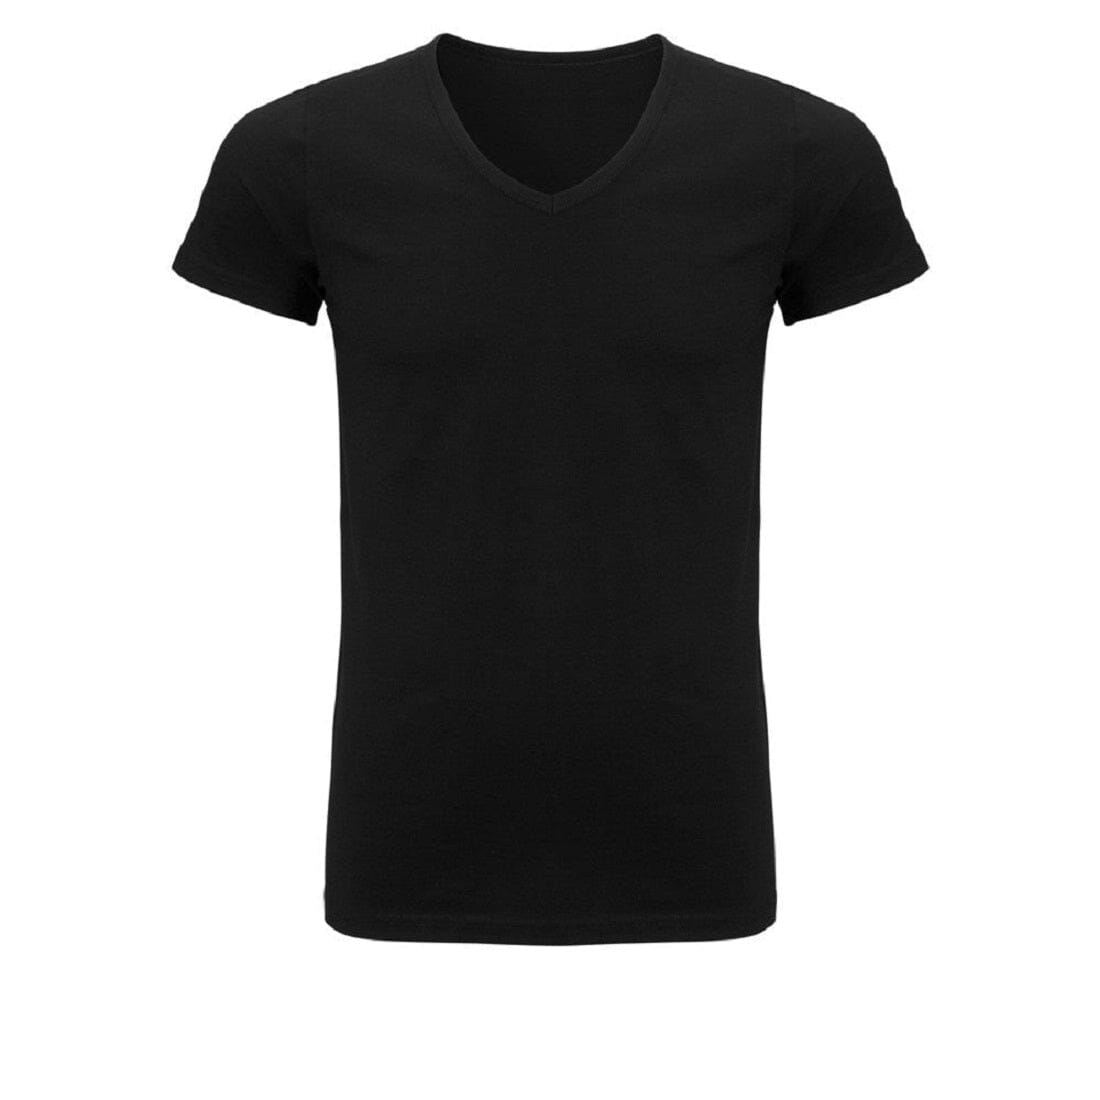 Ten Cate - 30870 - Basic V-Shirt 2-pack - Black Shirt Ten Cate 